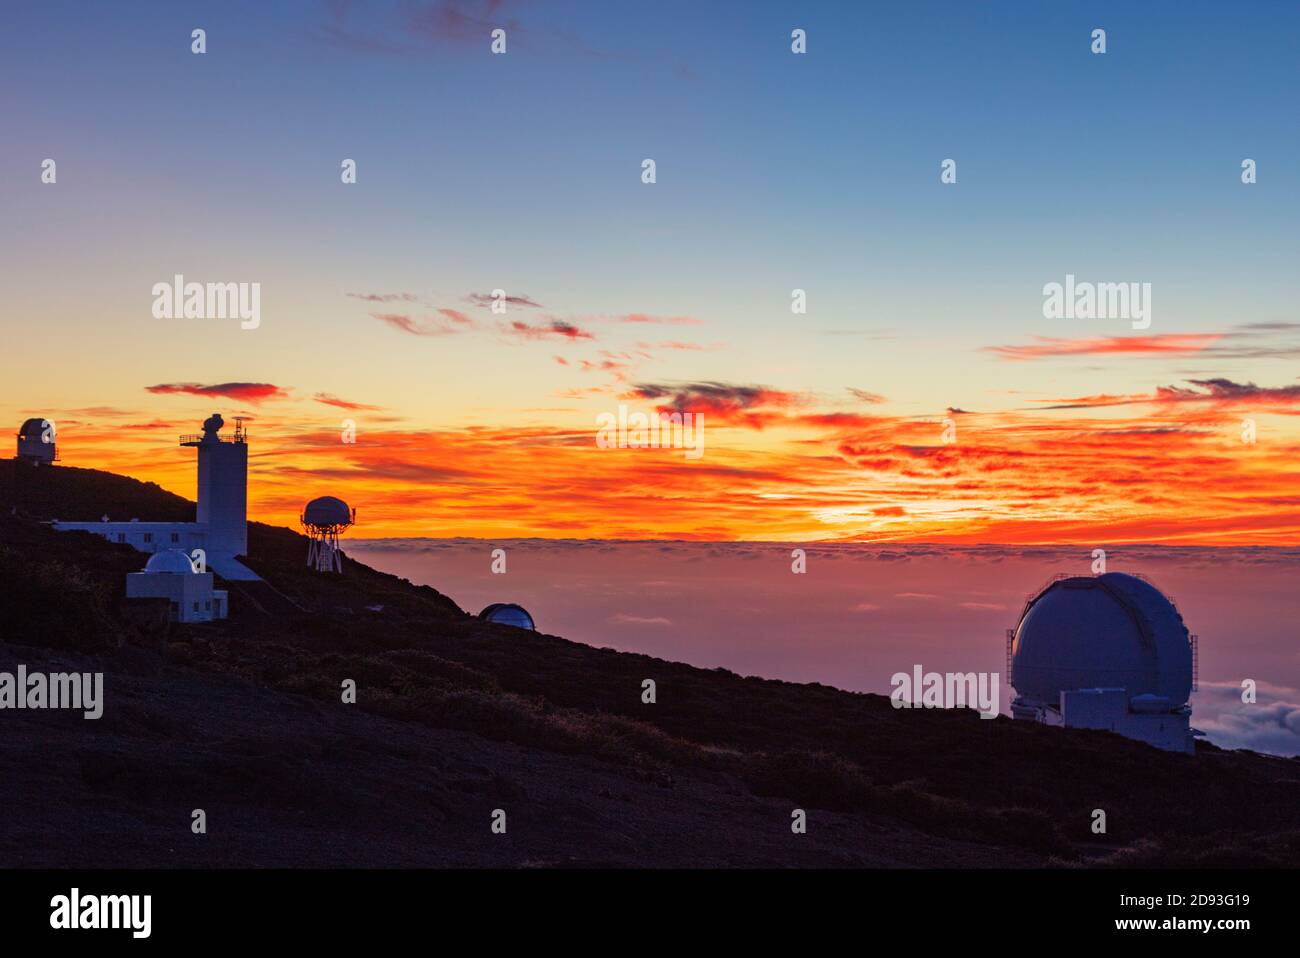 Europe, Spain, Canary Islands, La Palma, Unesco Biosphere site, National Park Caldera de Taburiente, Telescope observatory Stock Photo